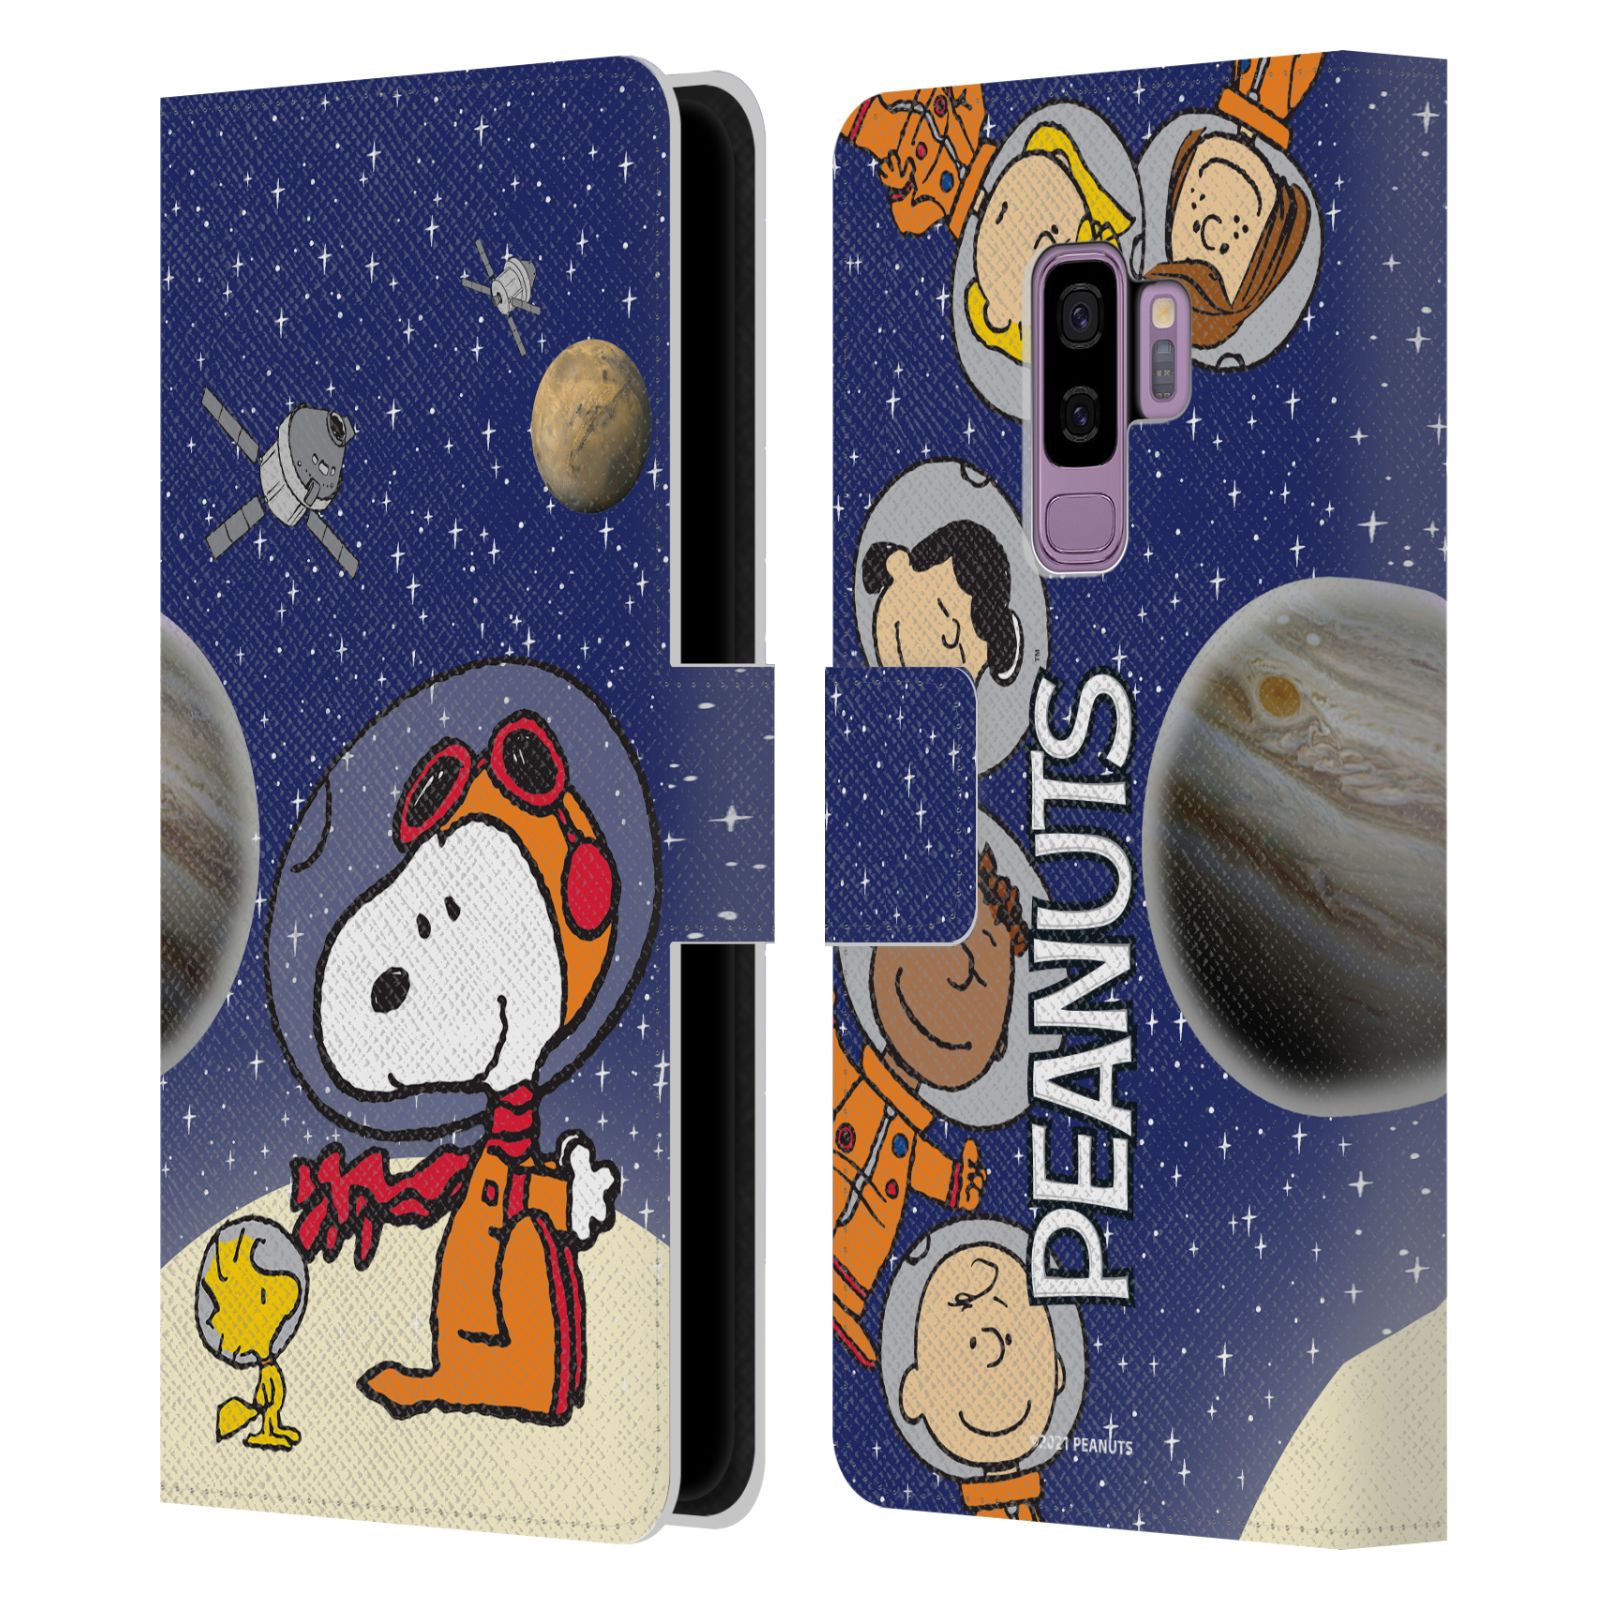 Pouzdro na mobil Samsung Galaxy S9+ / S9 PLUS - HEAD CASE - Peanuts Snoopy ve vesmíru 2